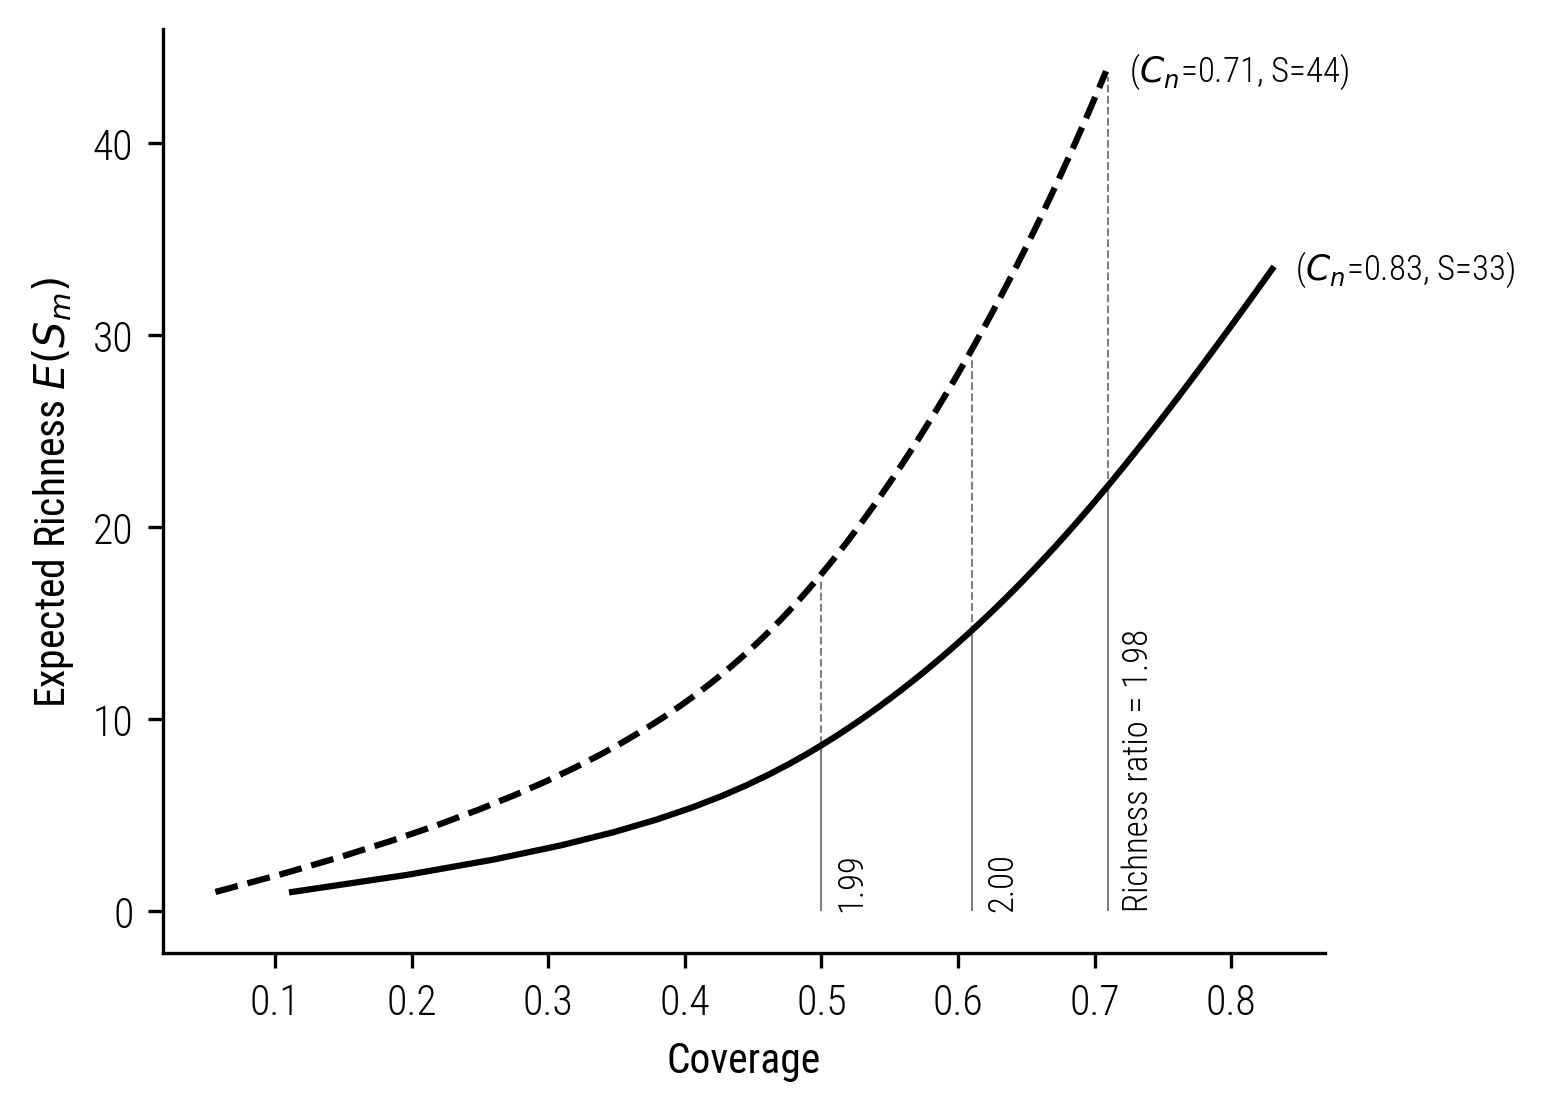 Figure 6: Illustration of Standardizing Rarefaction Curves by Coverage